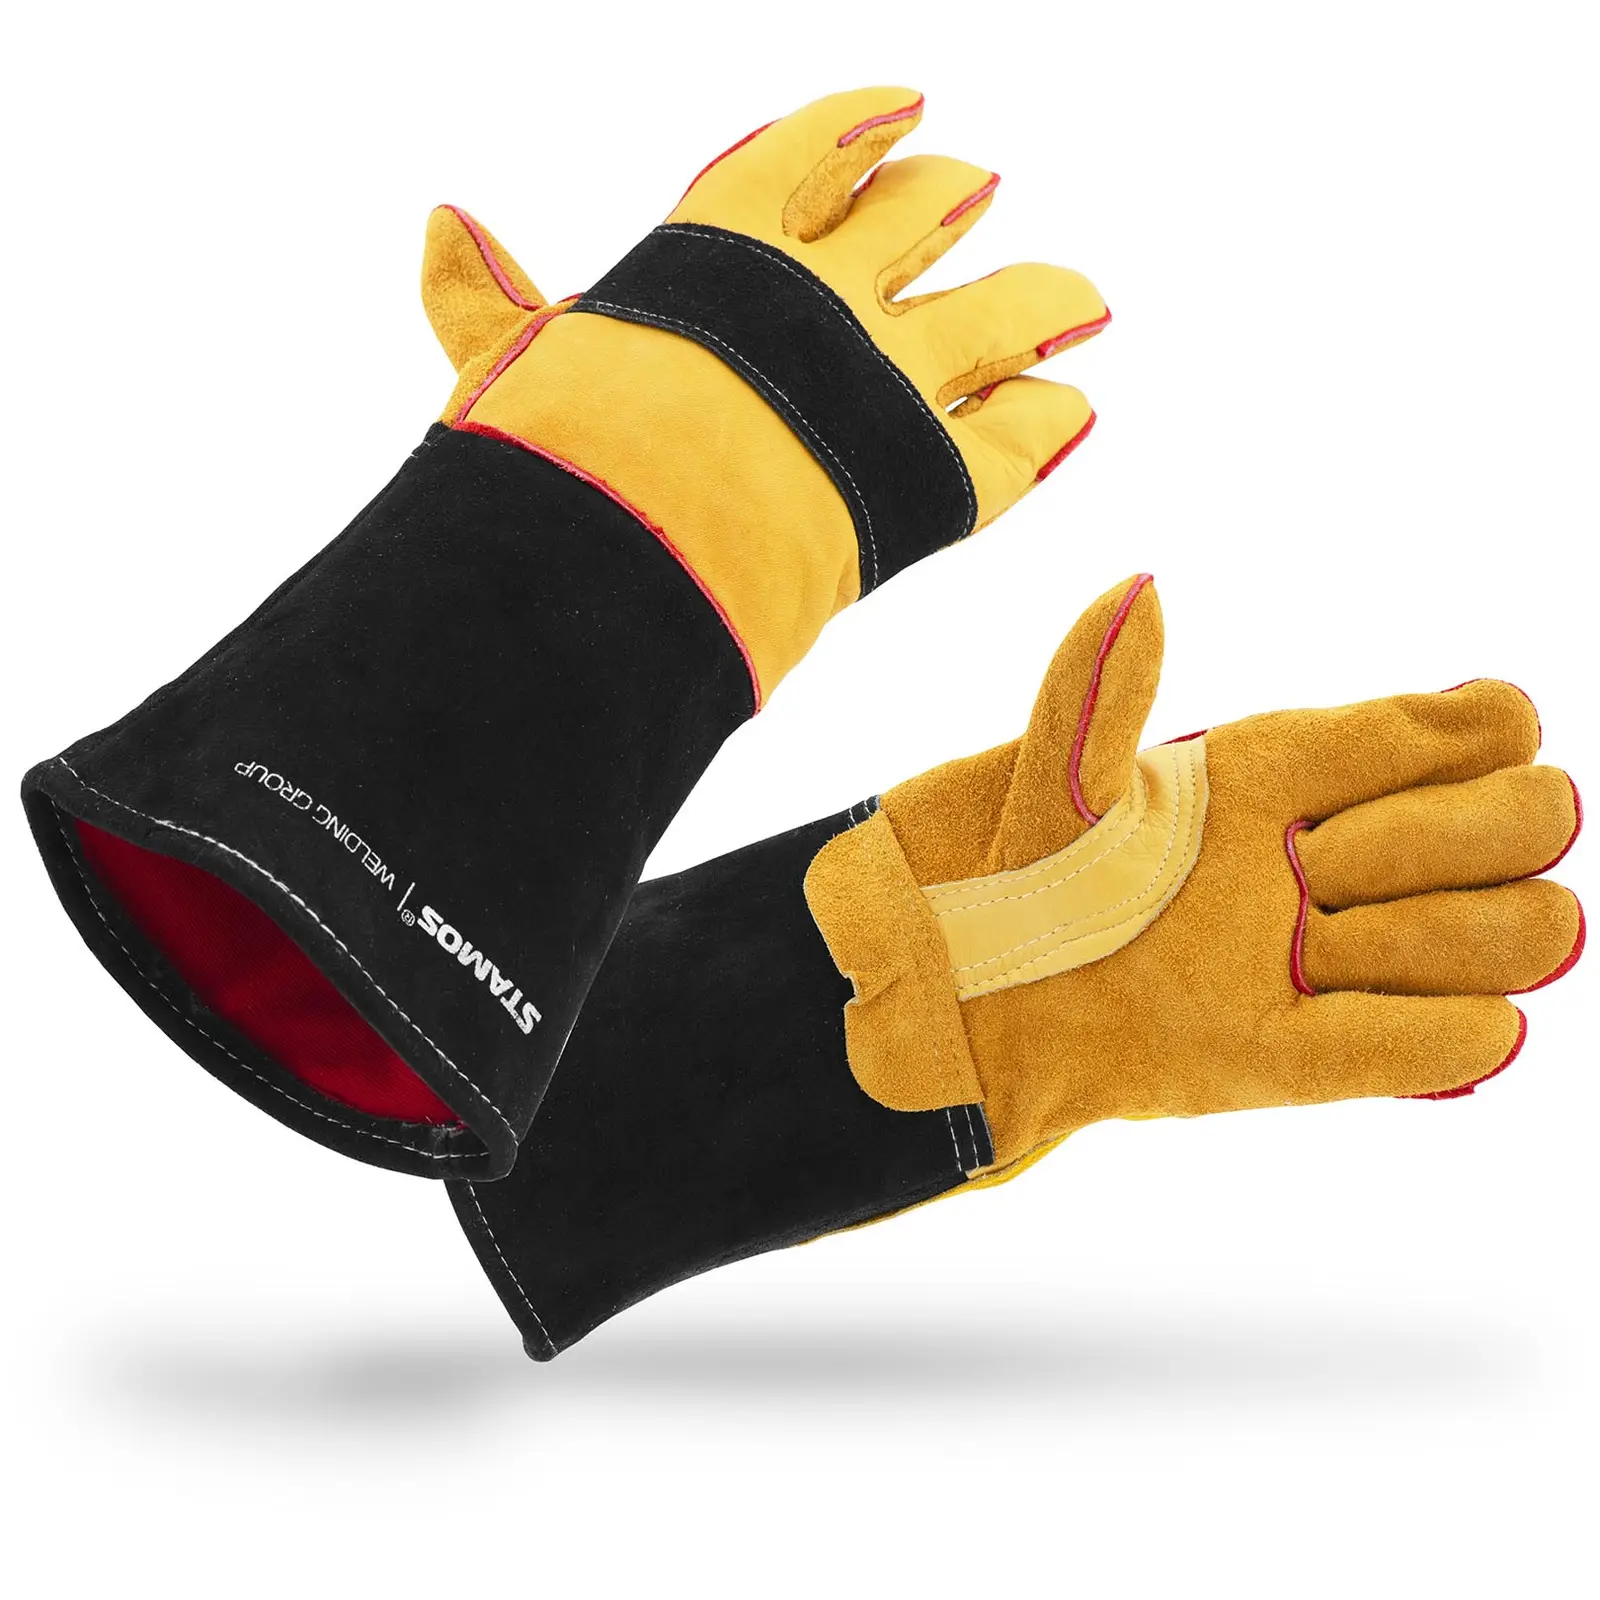 Welding Gloves - size L